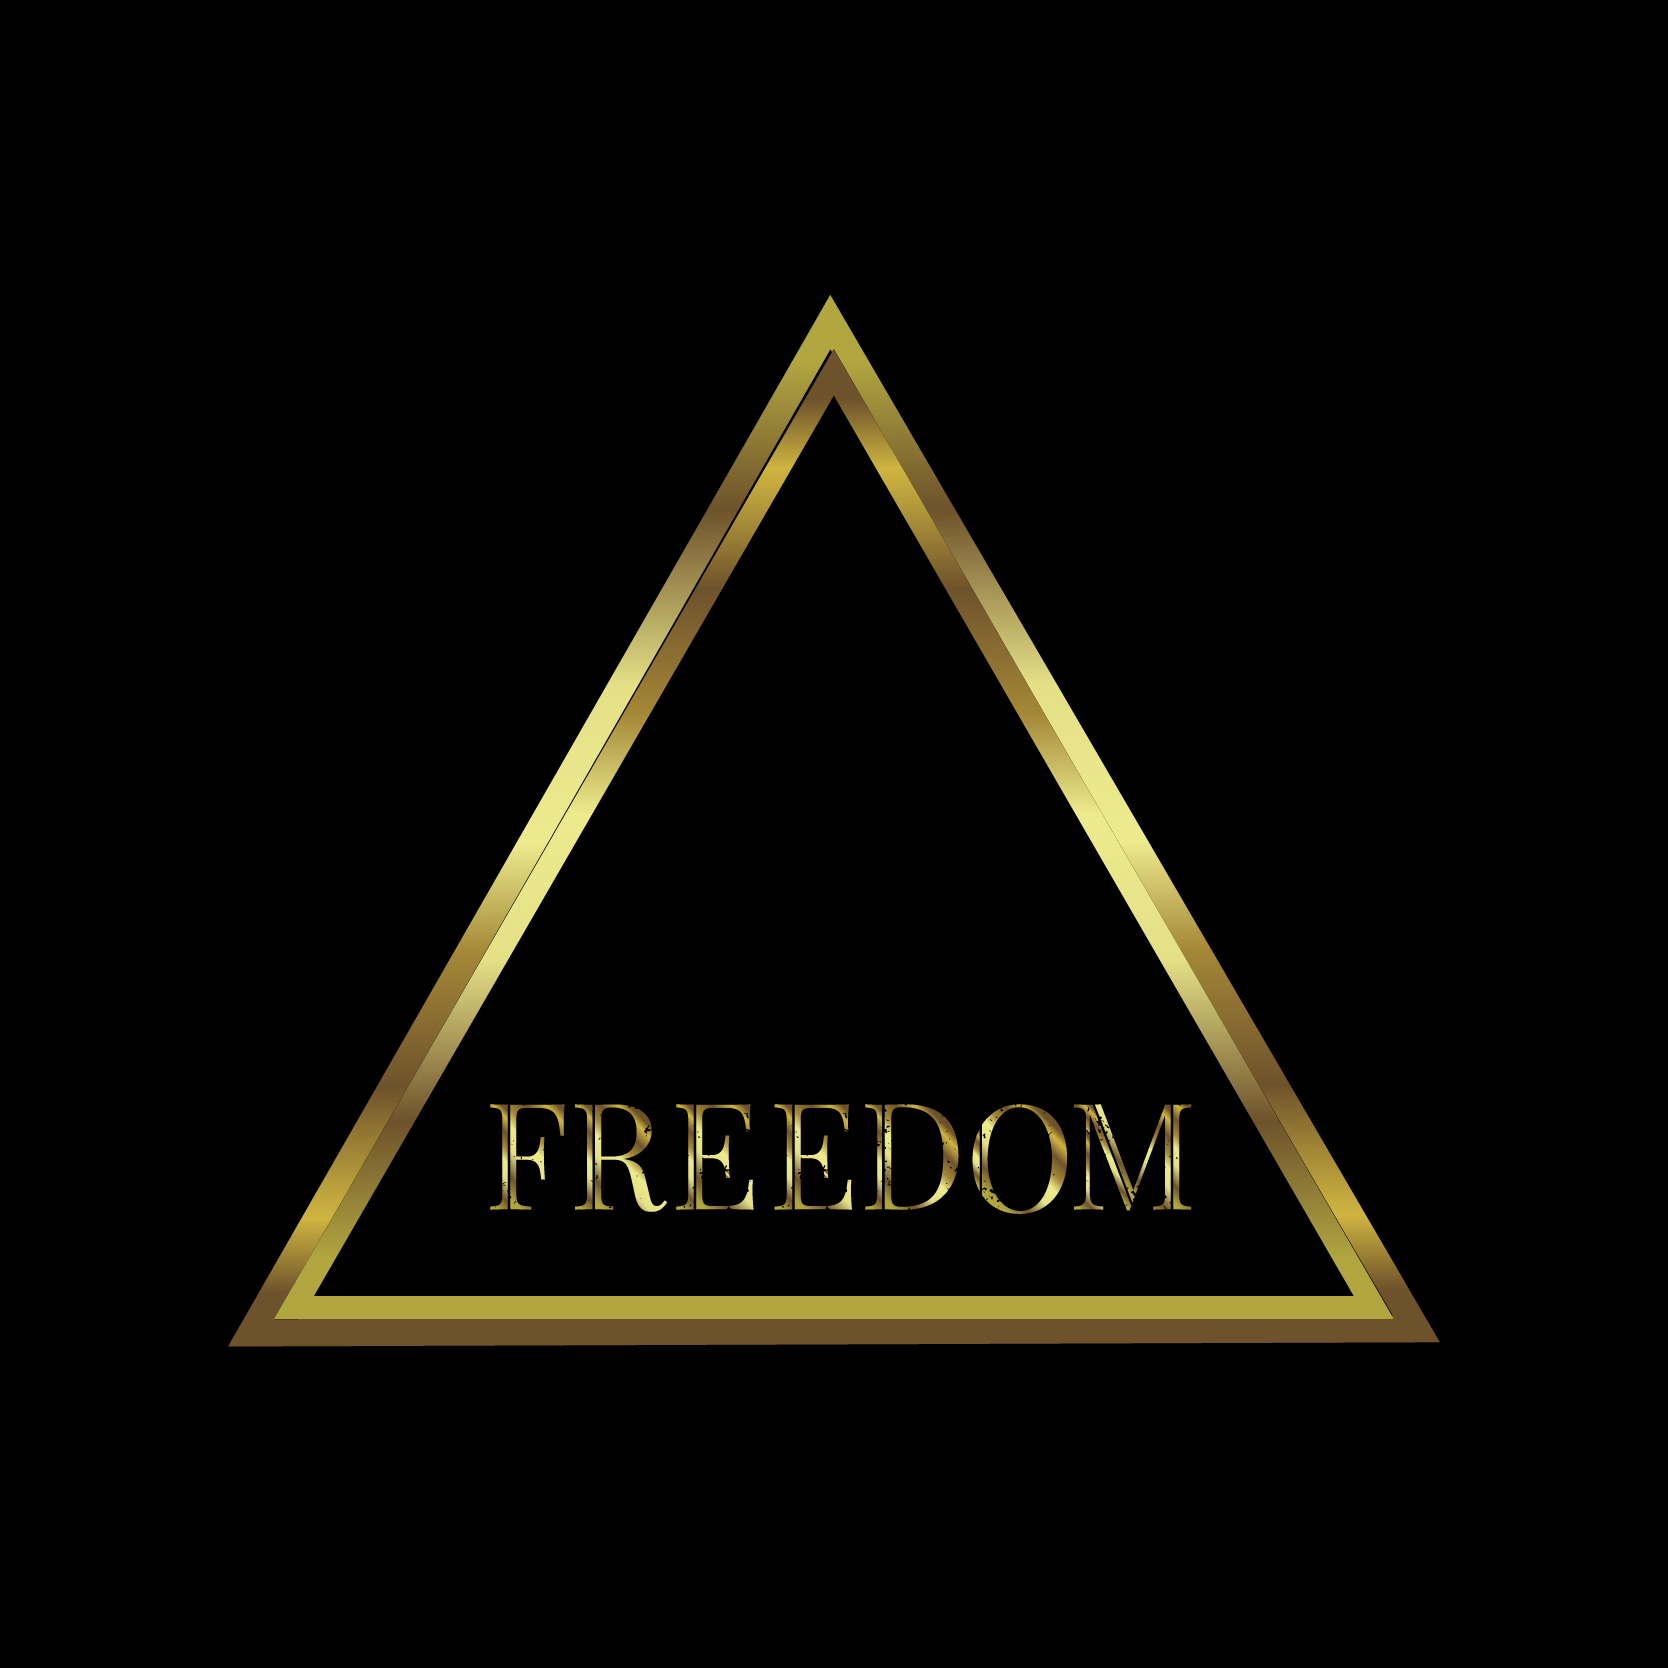 The Freedom Triangle